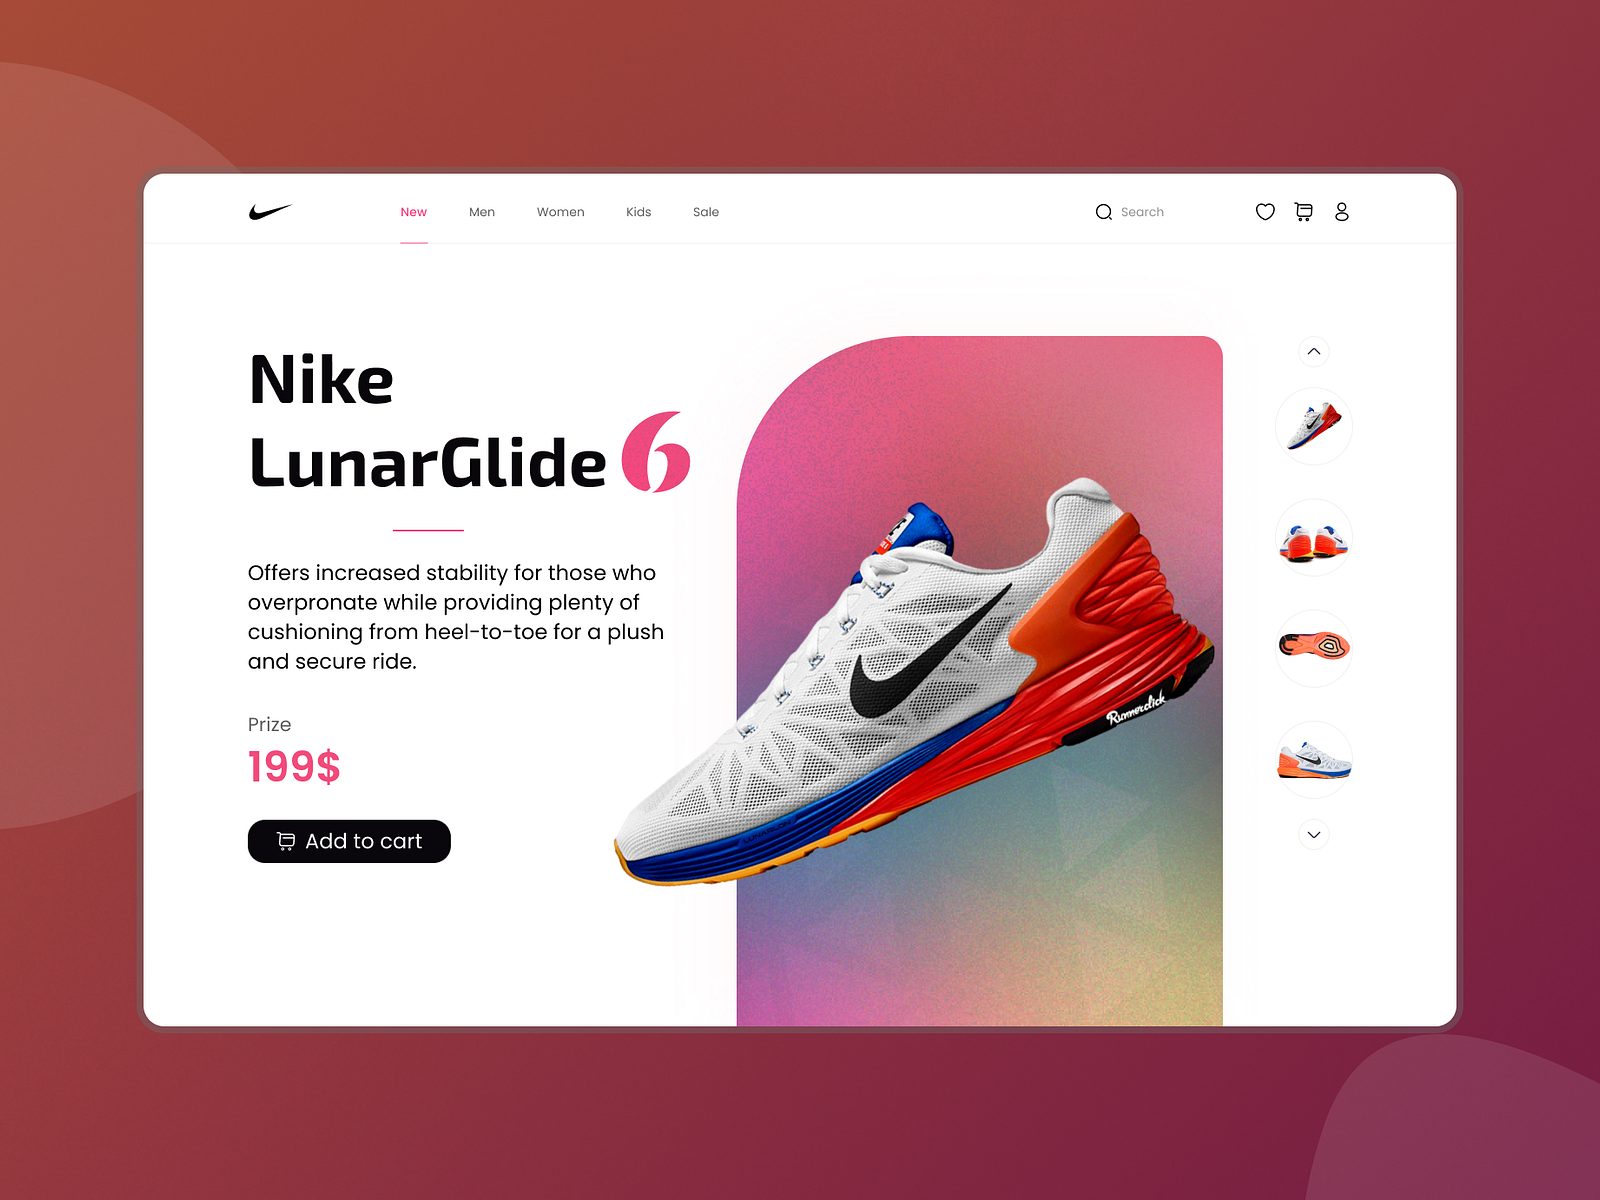 Nike website by Hussein Mahmood on Dribbble